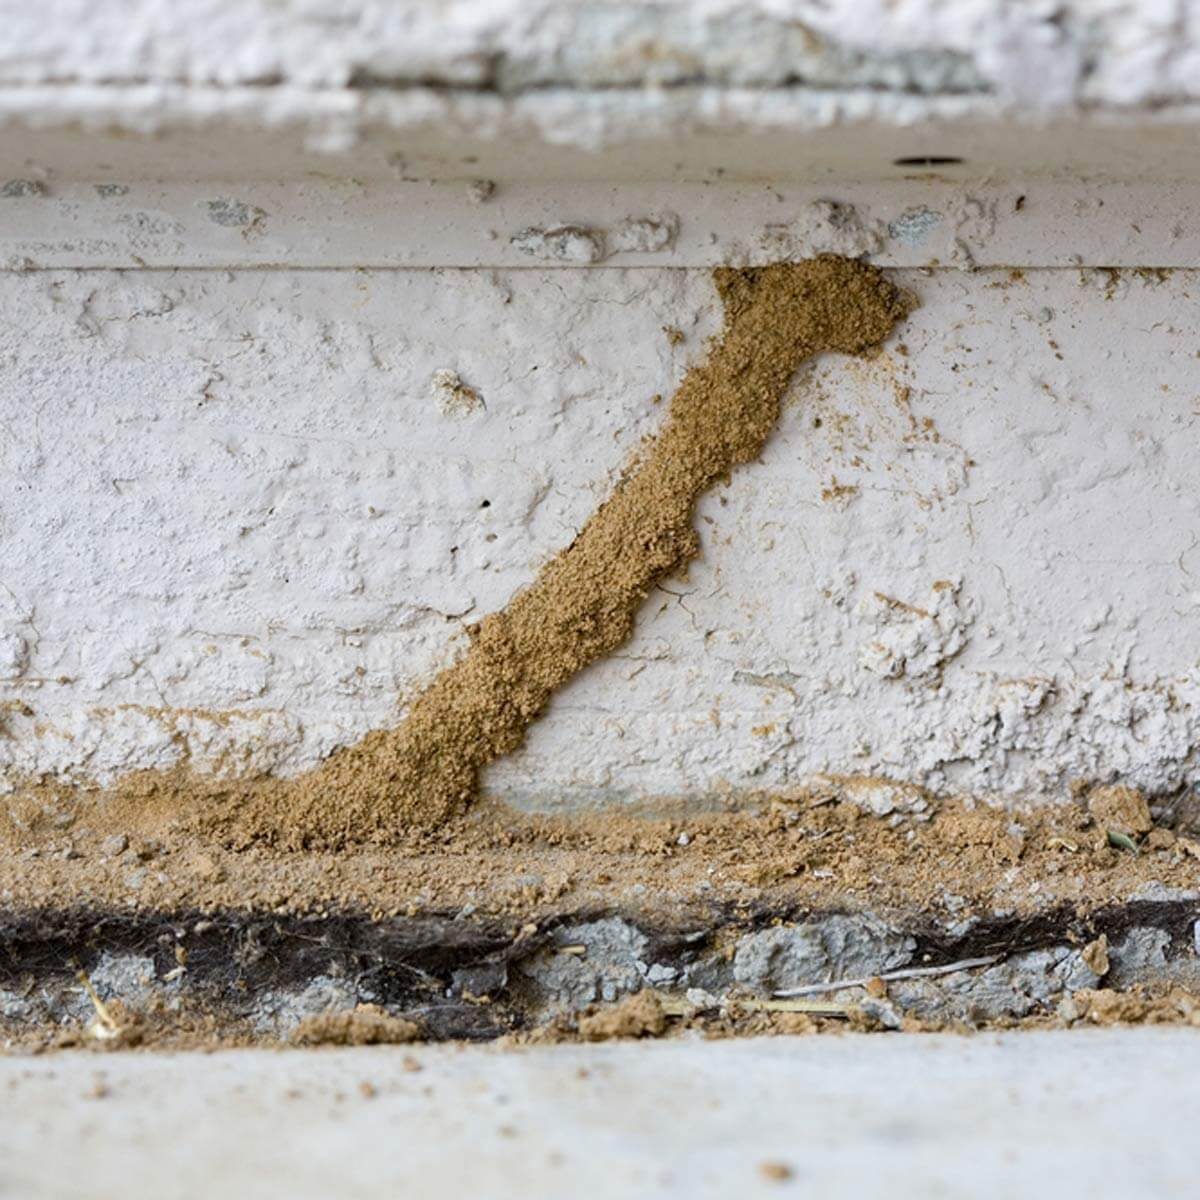 Termites termite control inspect